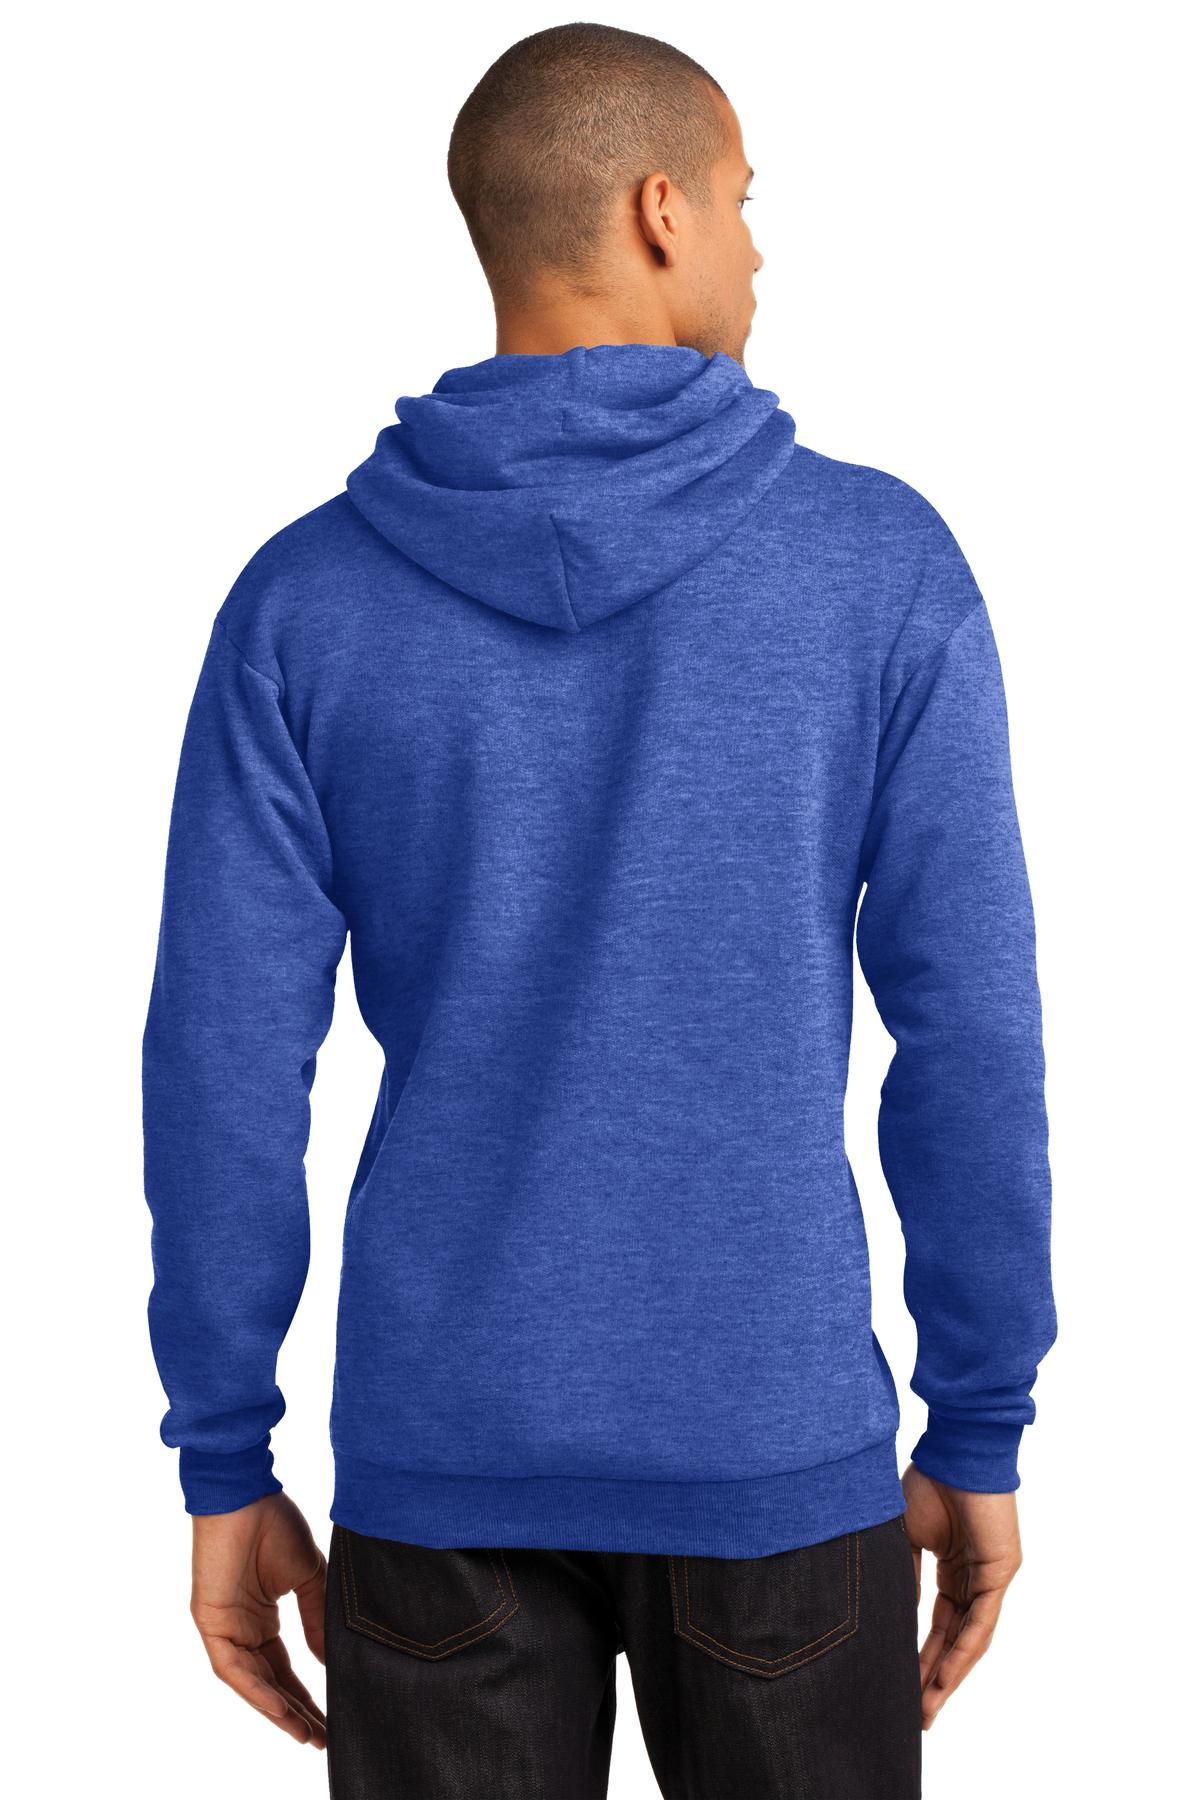 Port & Company - Core Fleece Pullover Hooded Sweatshirt. PC78H - Heather Royal